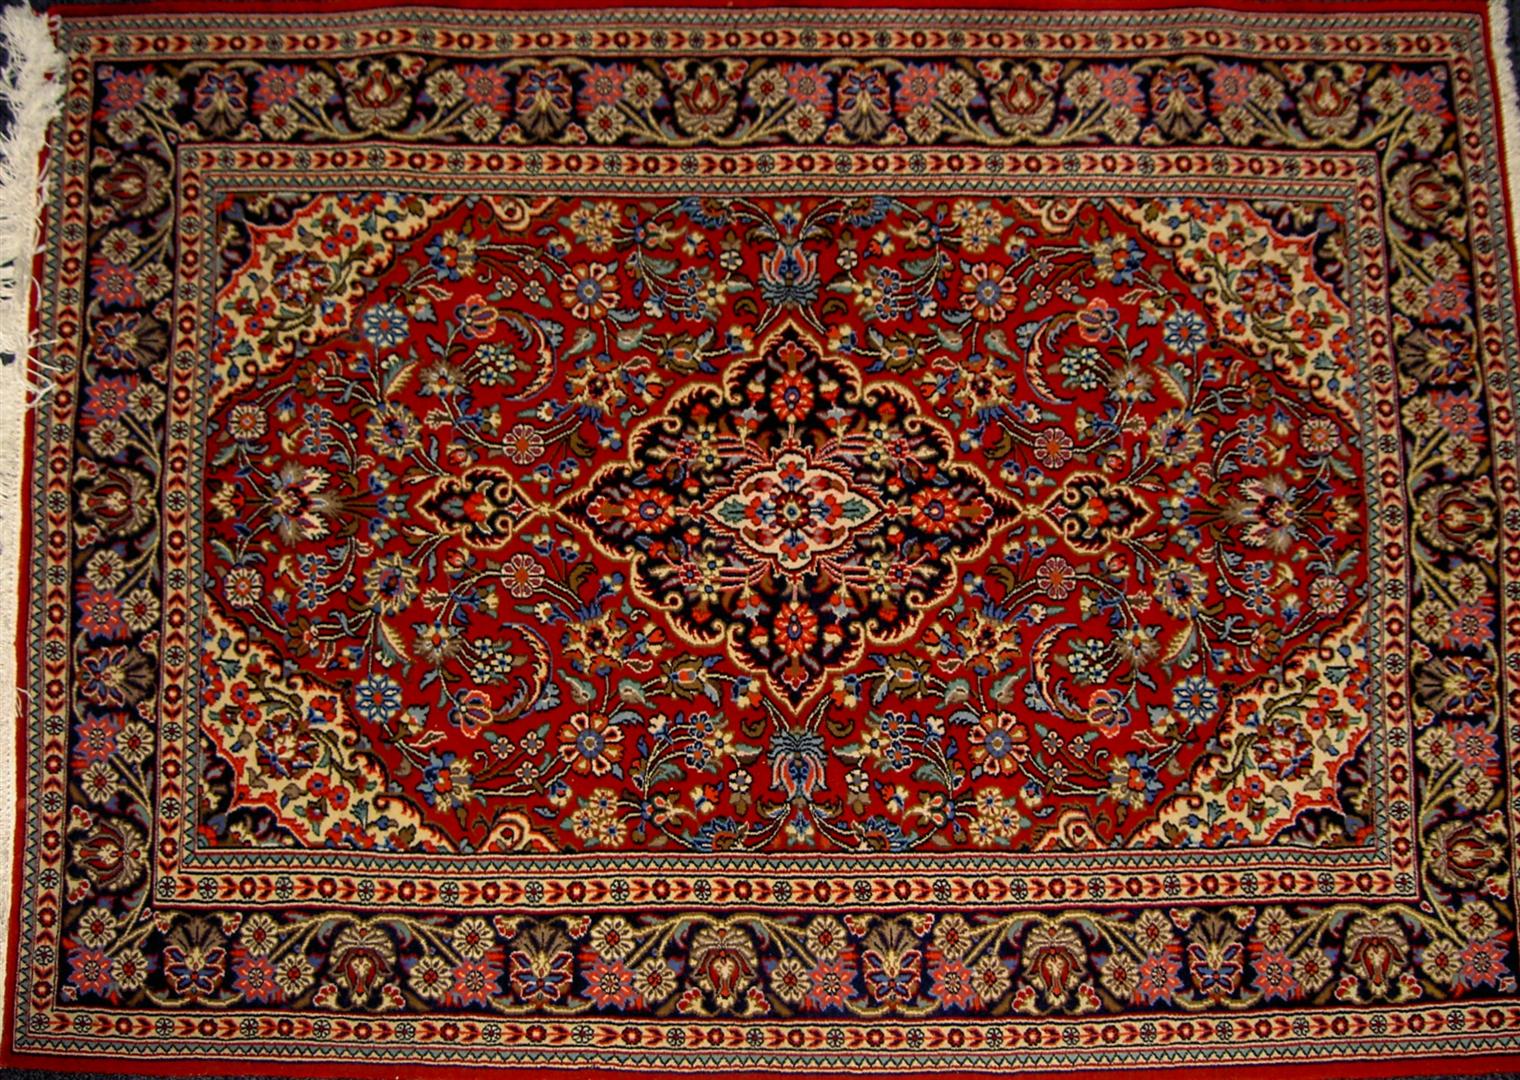 Persian Carpet photo - 1